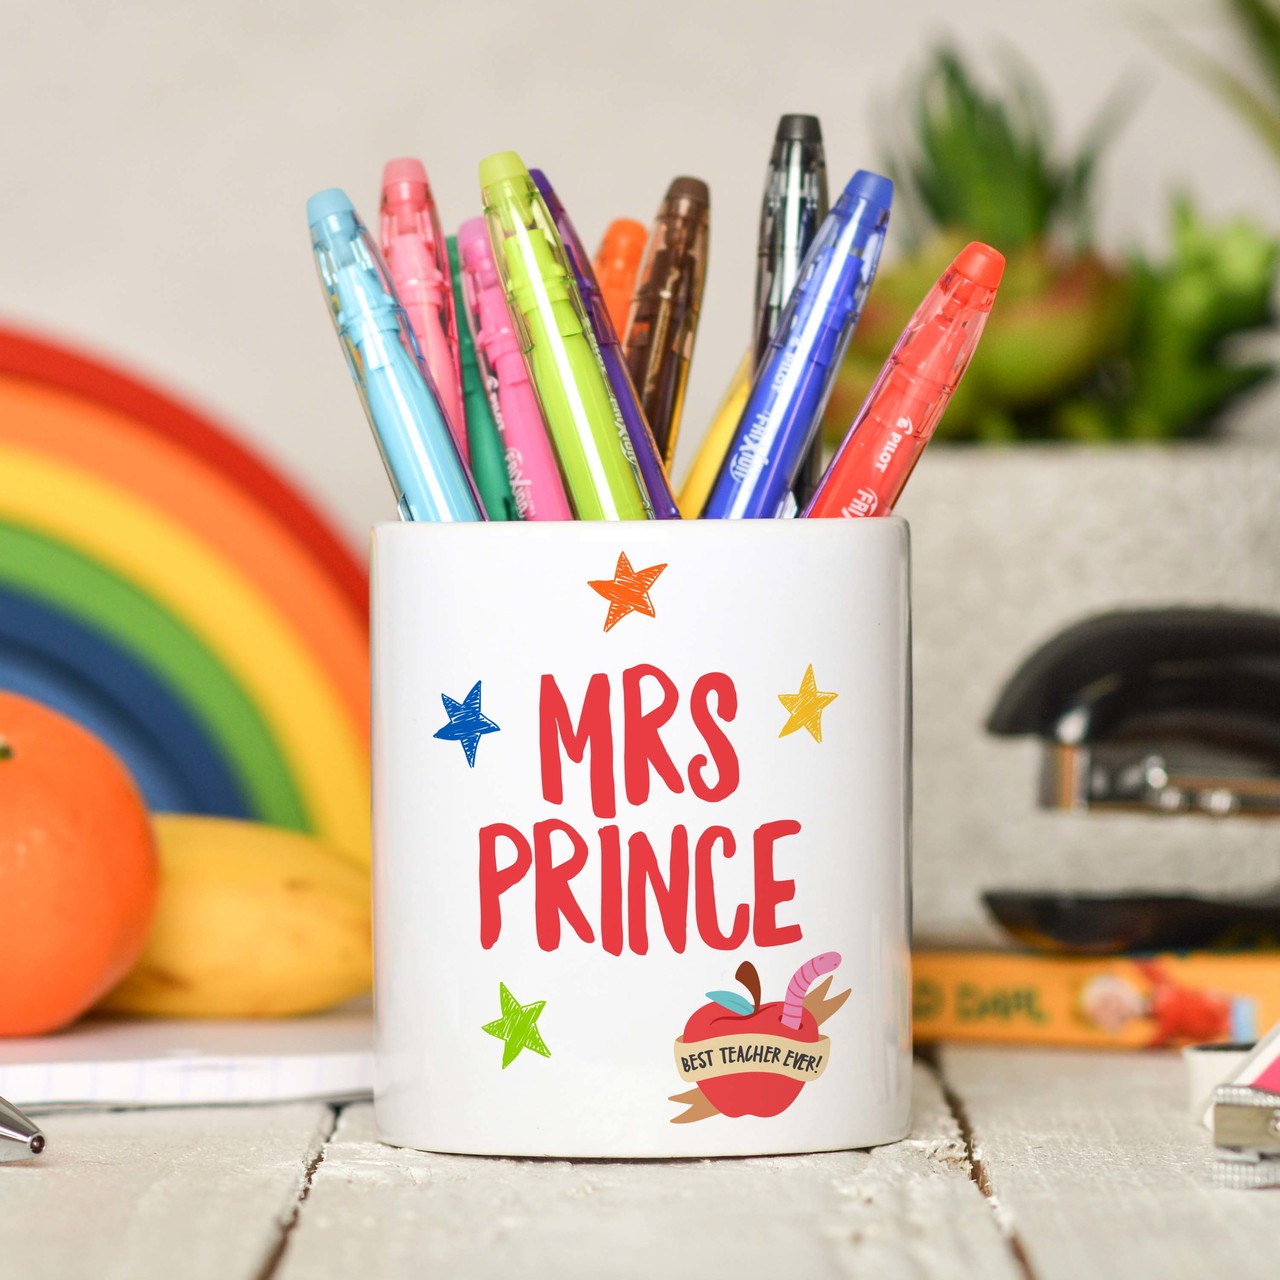 Personalised Teacher Name – Best teacher apple Pencil Pot